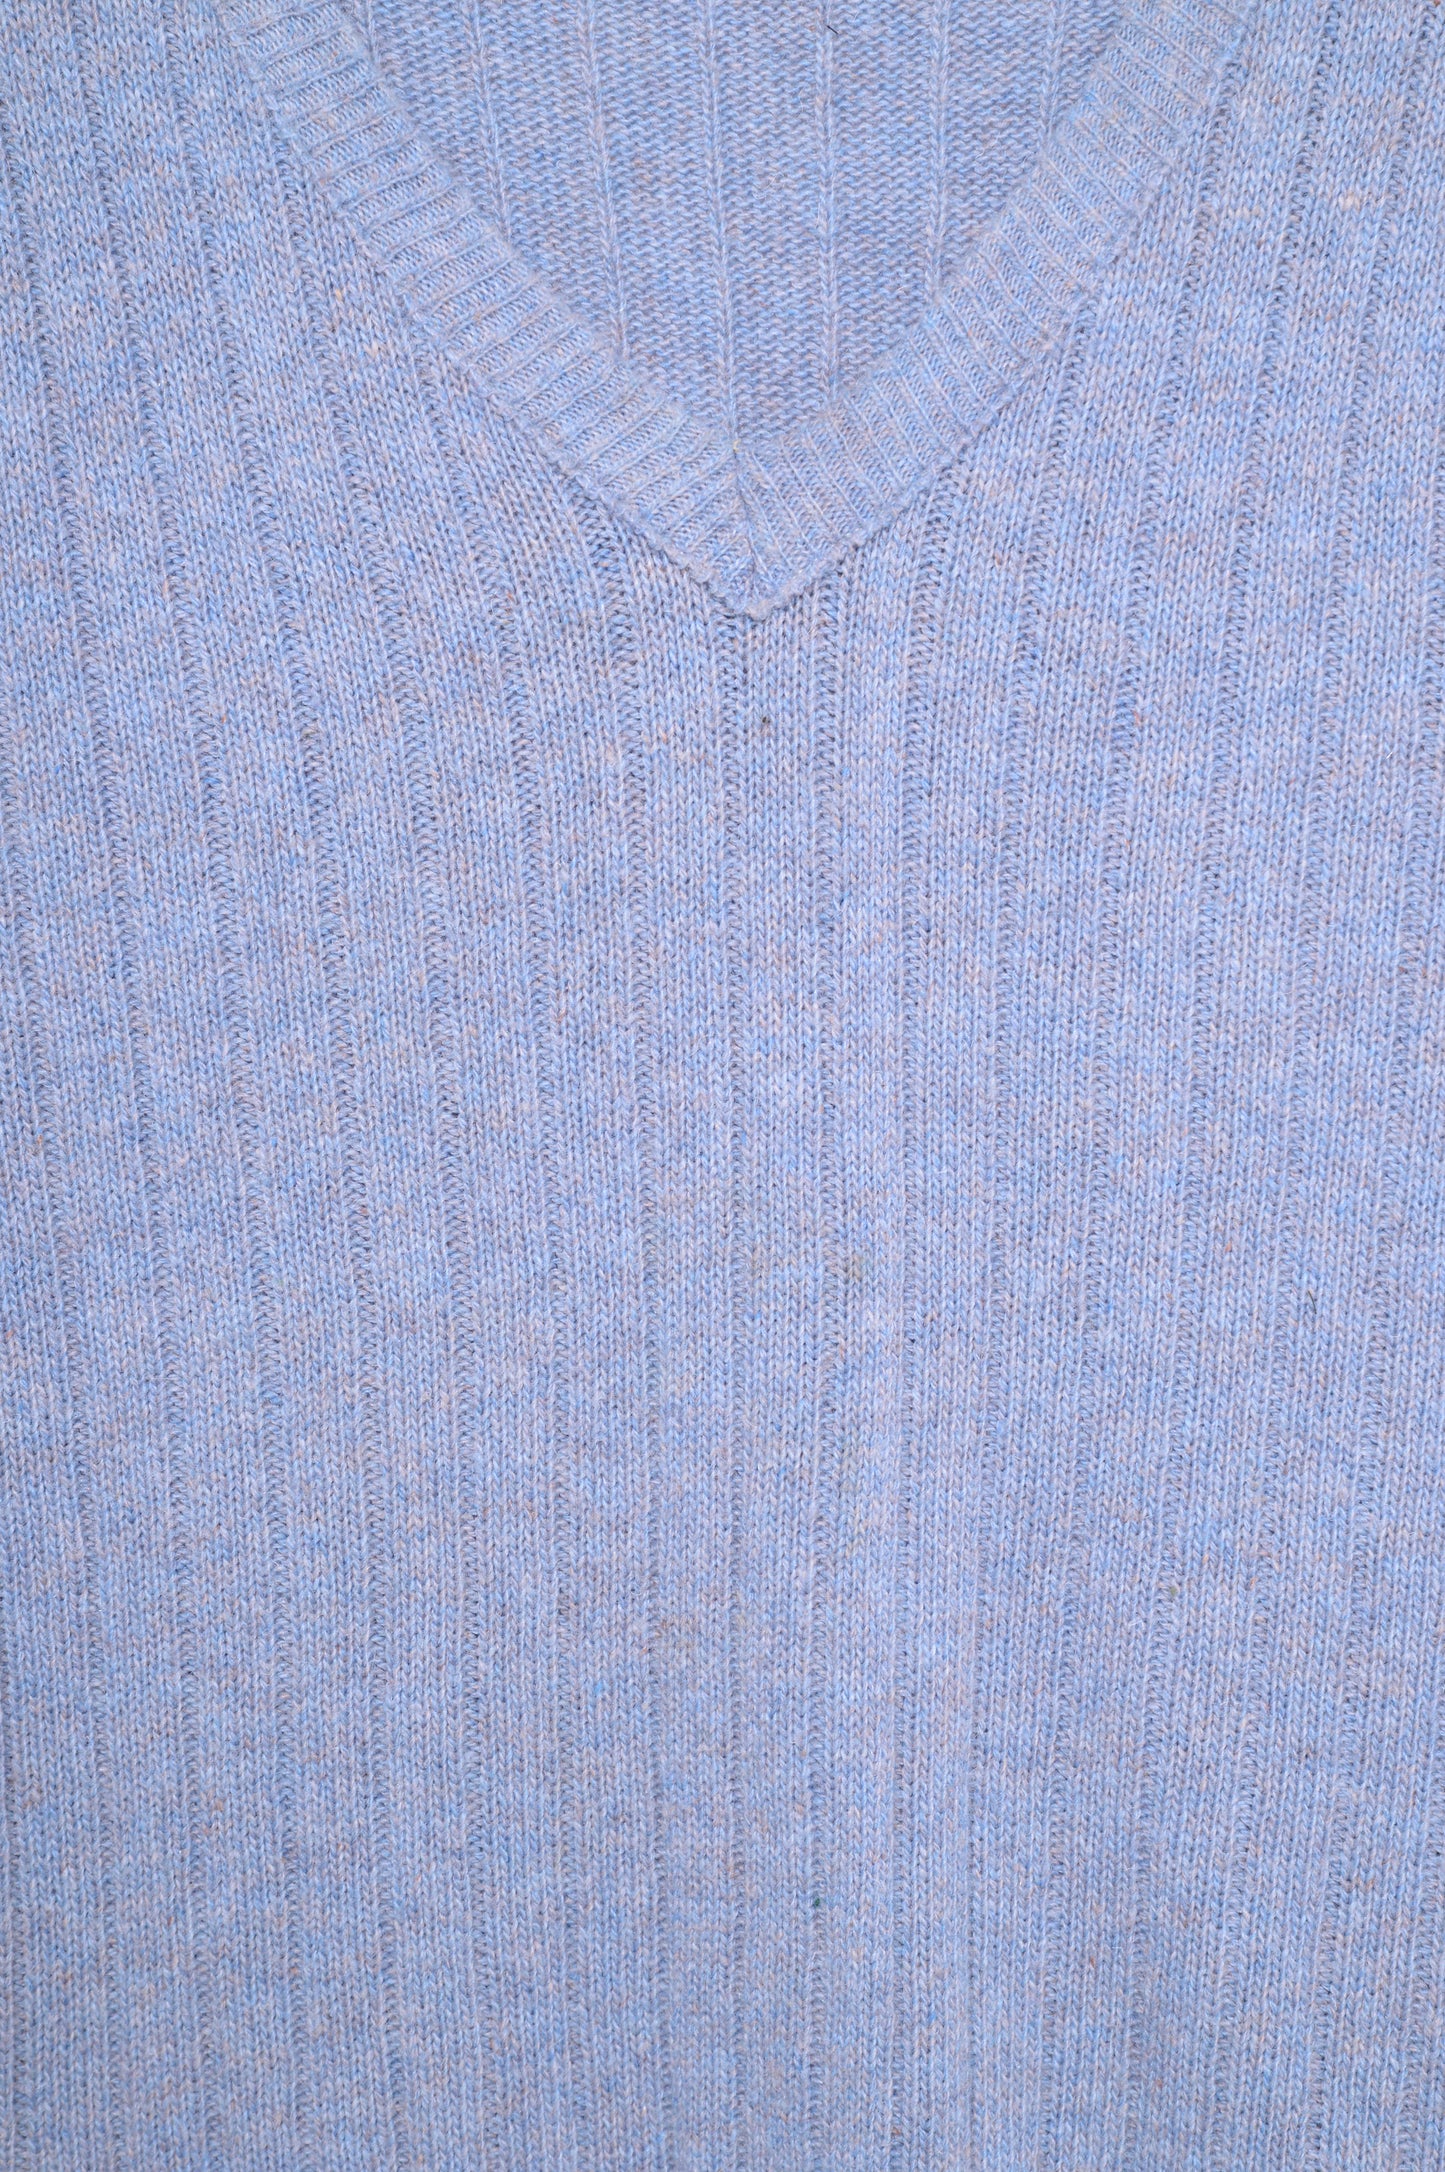 1960s Marled Sweater Vest